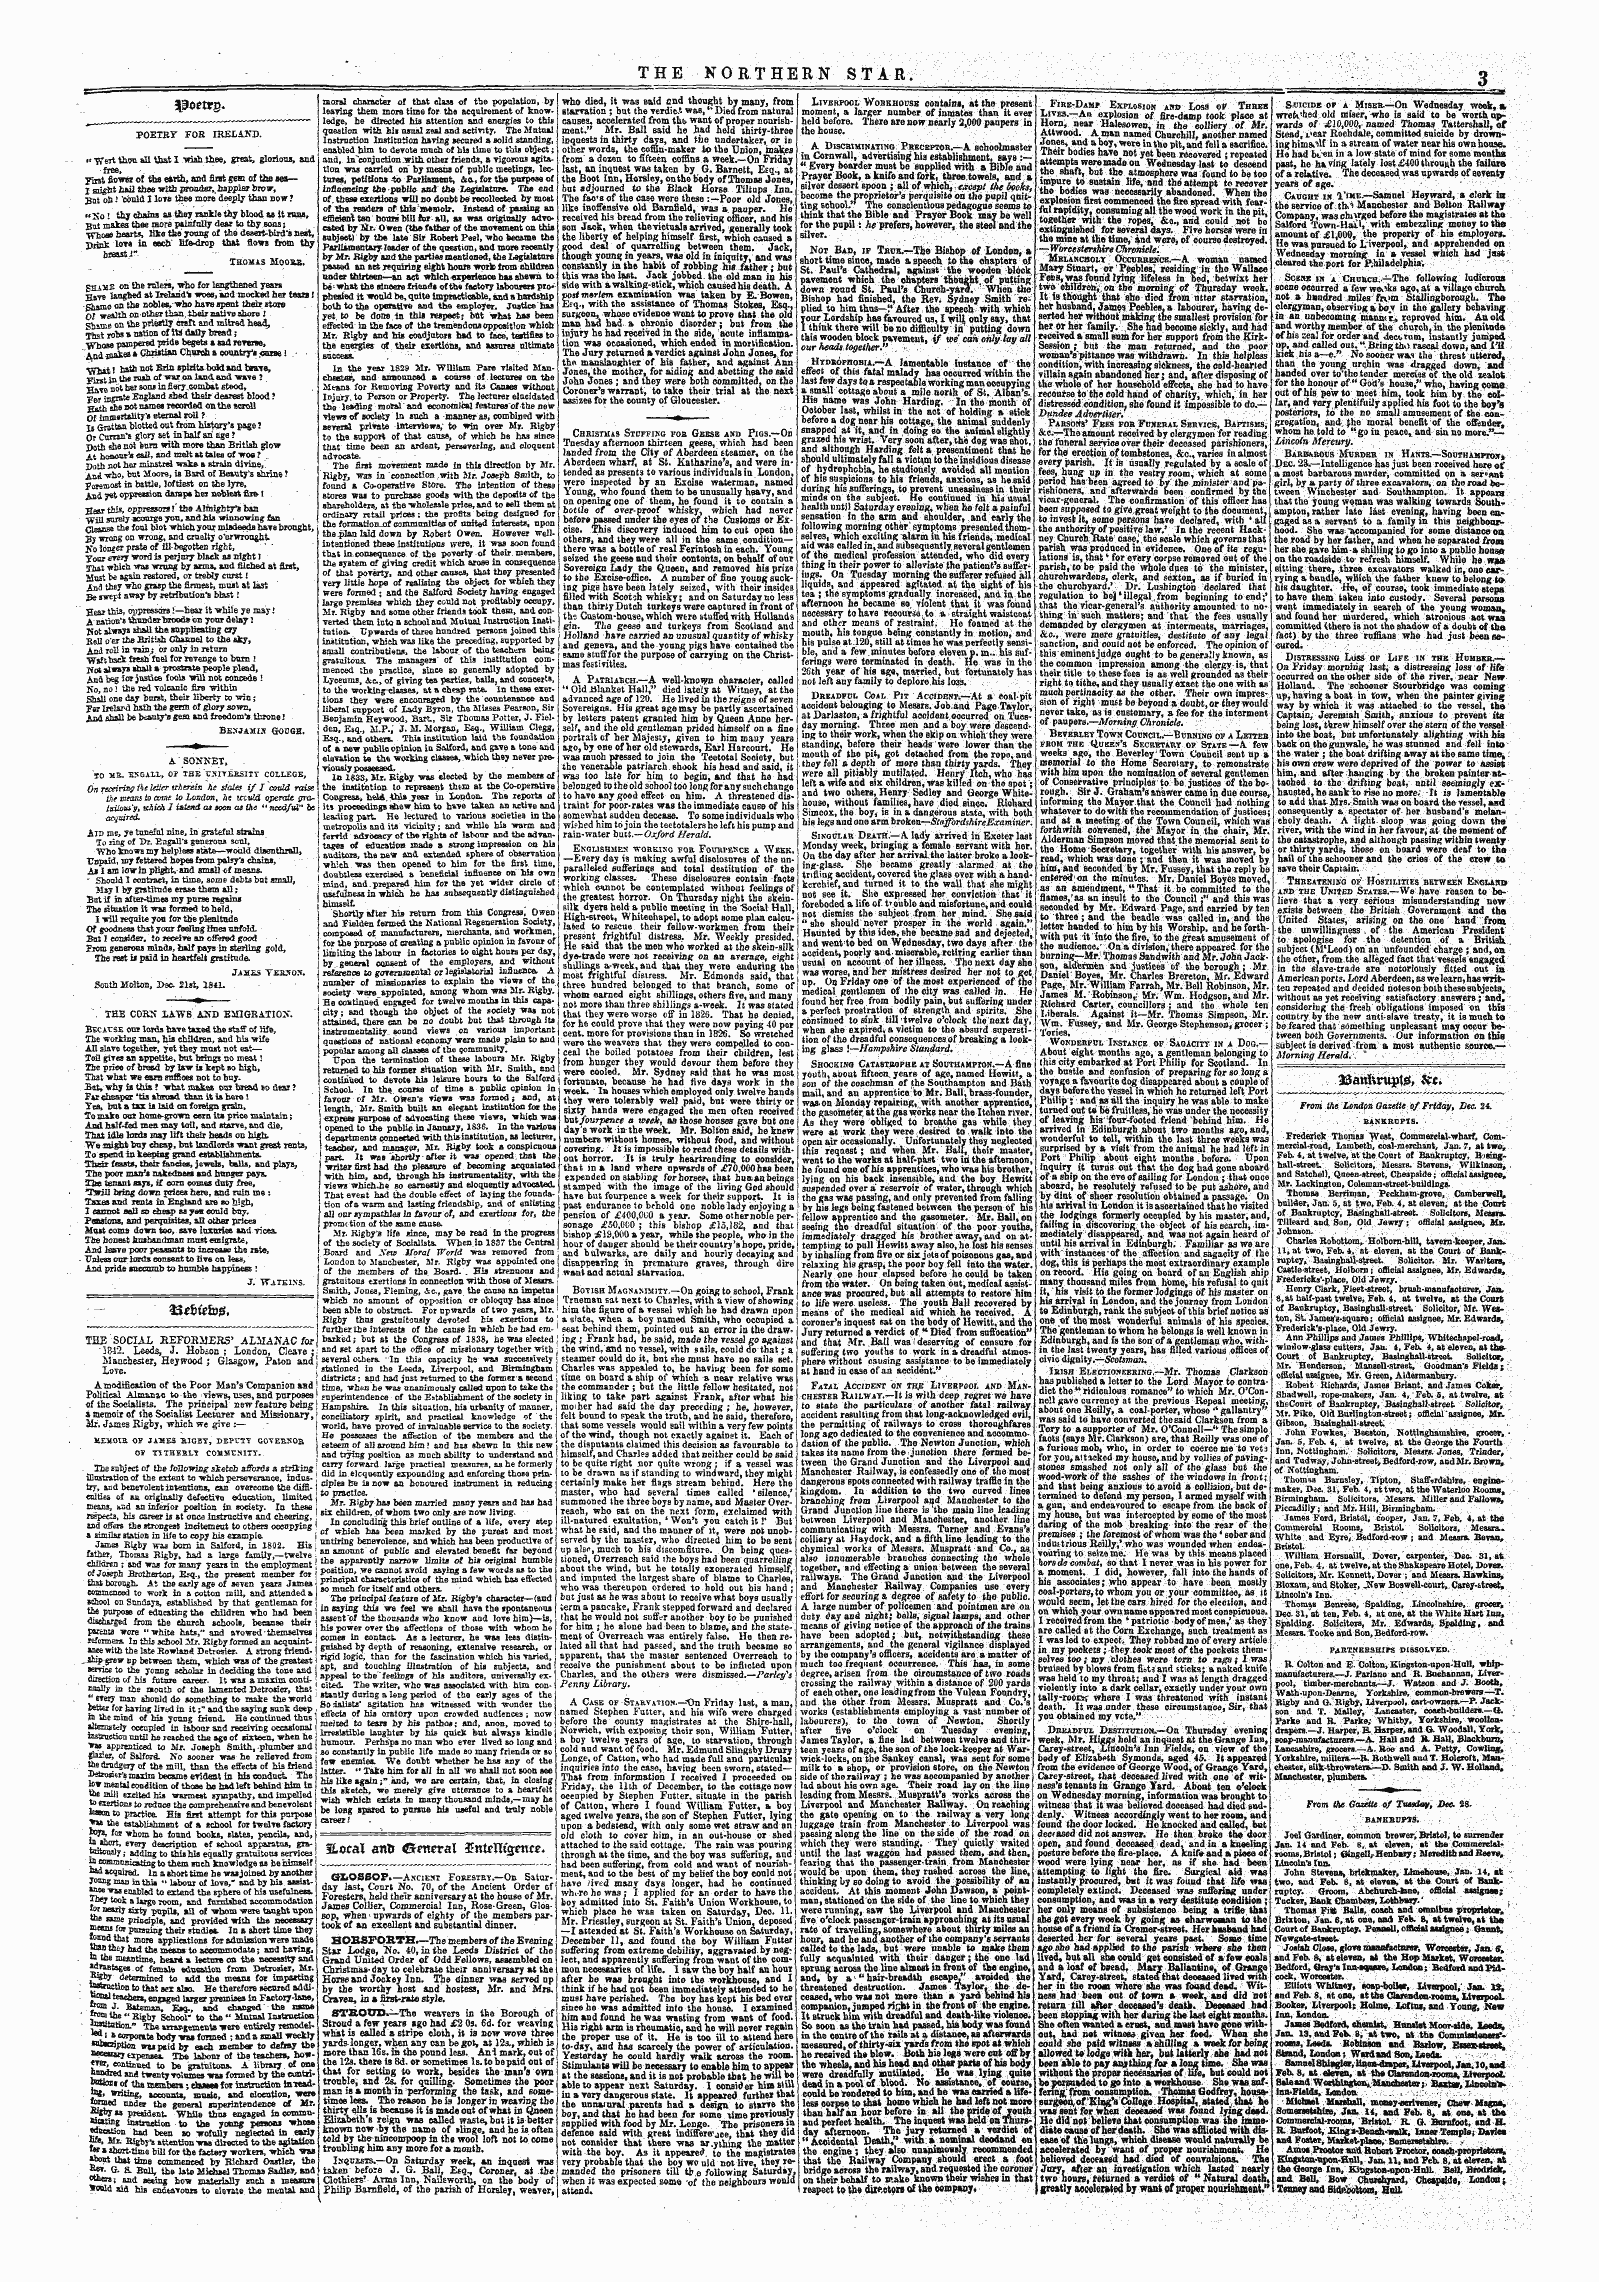 Northern Star (1837-1852): jS F Y, 3rd edition - I3*&Iebs